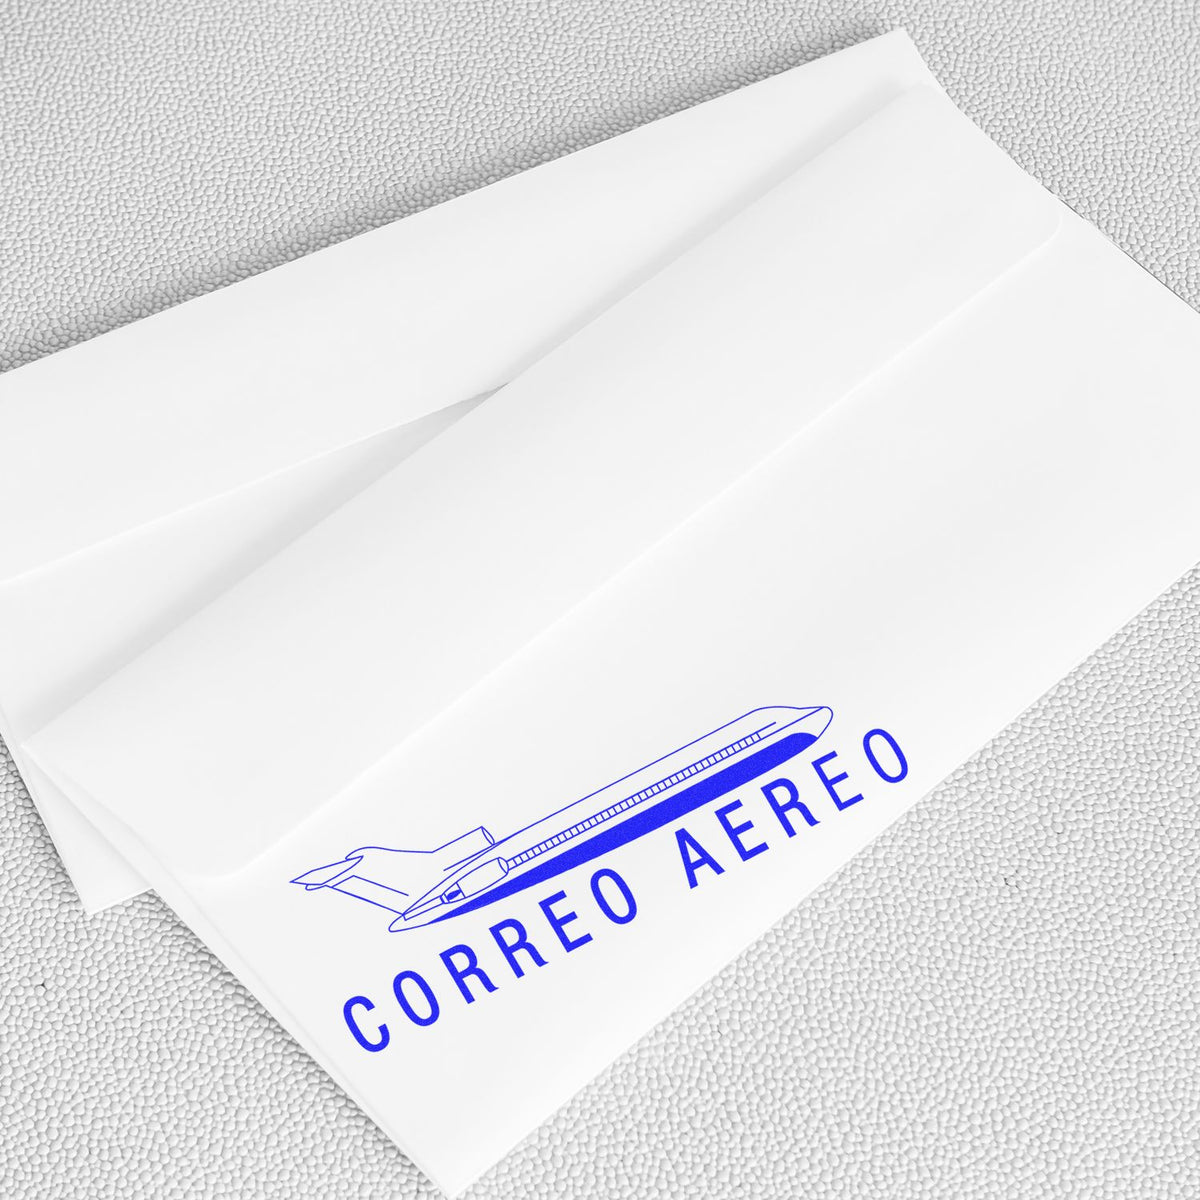 Slim Pre-Inked Correo Aero Stamp In Use Photo